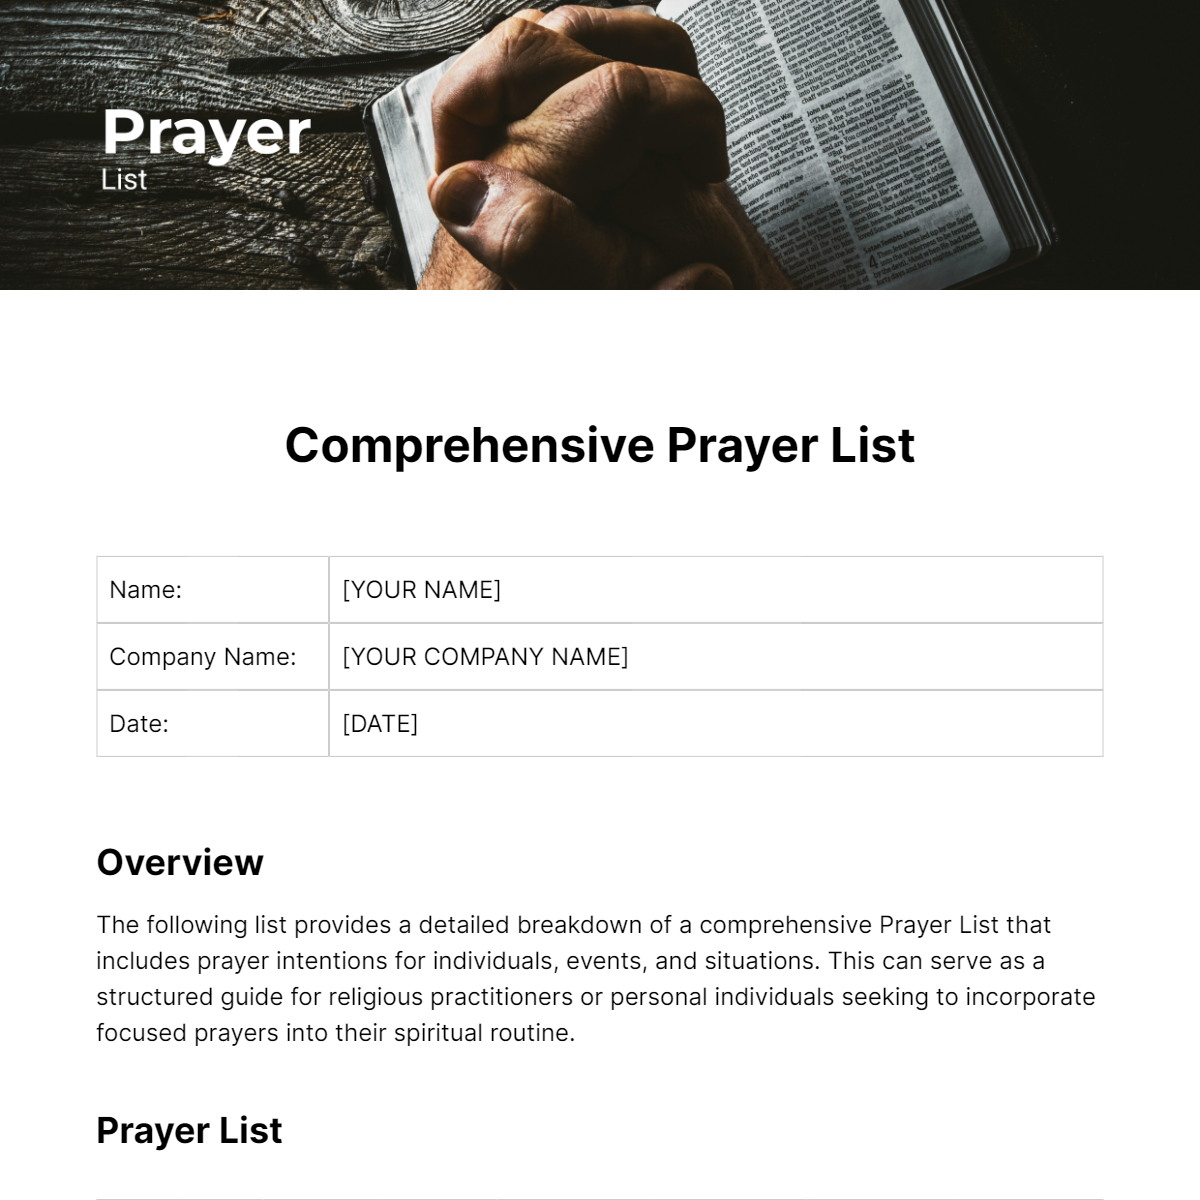 Prayer List Template - Edit Online & Download Example | Template.net